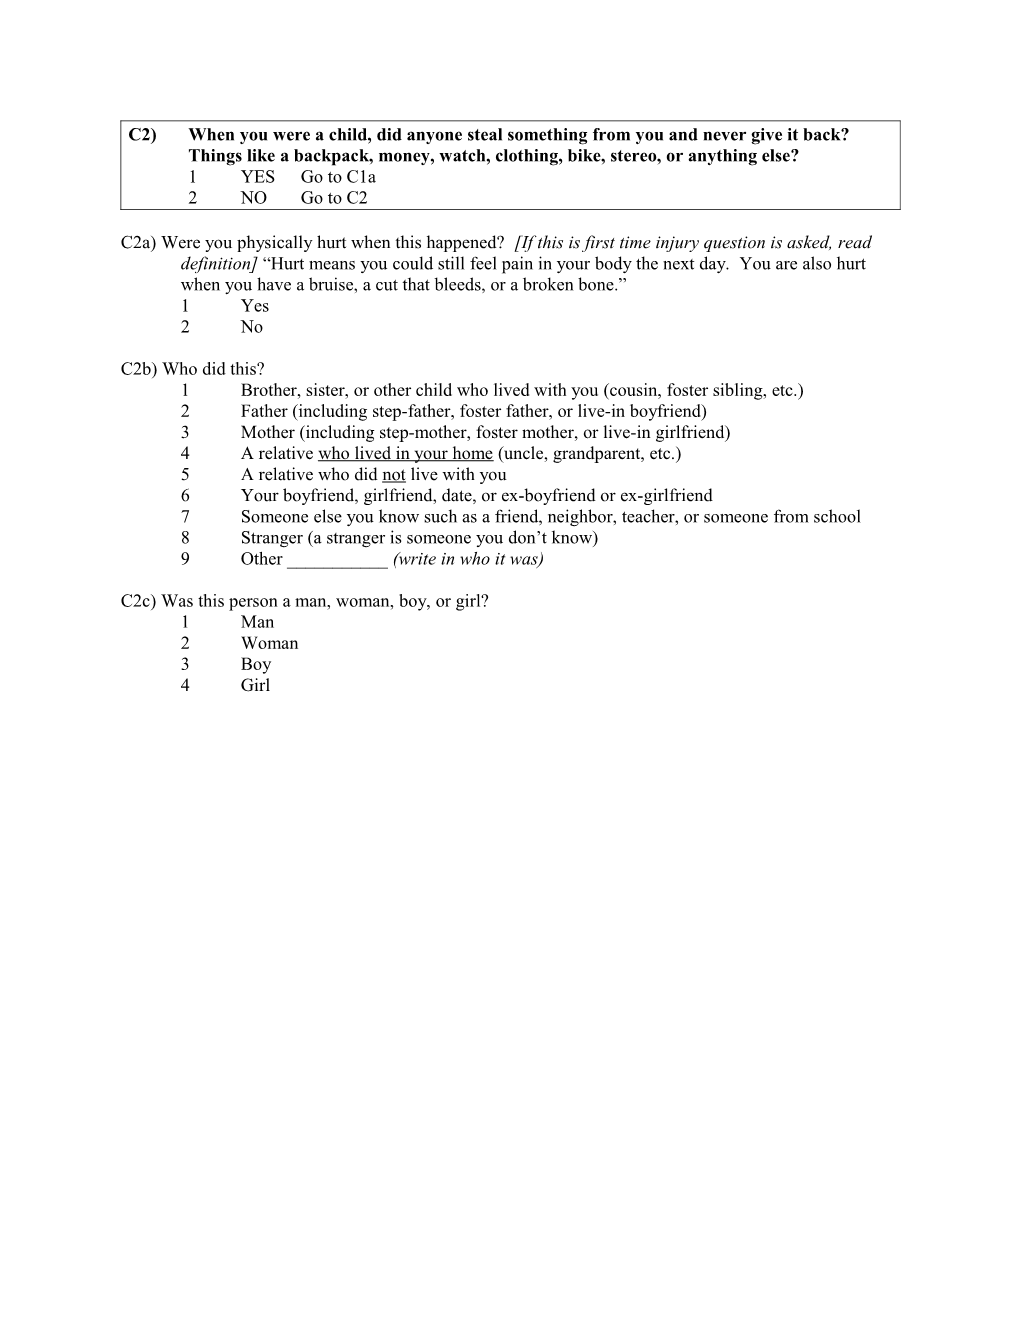 JVQ-R2, Abbreviated Interview Version, Adult Retrospective Form